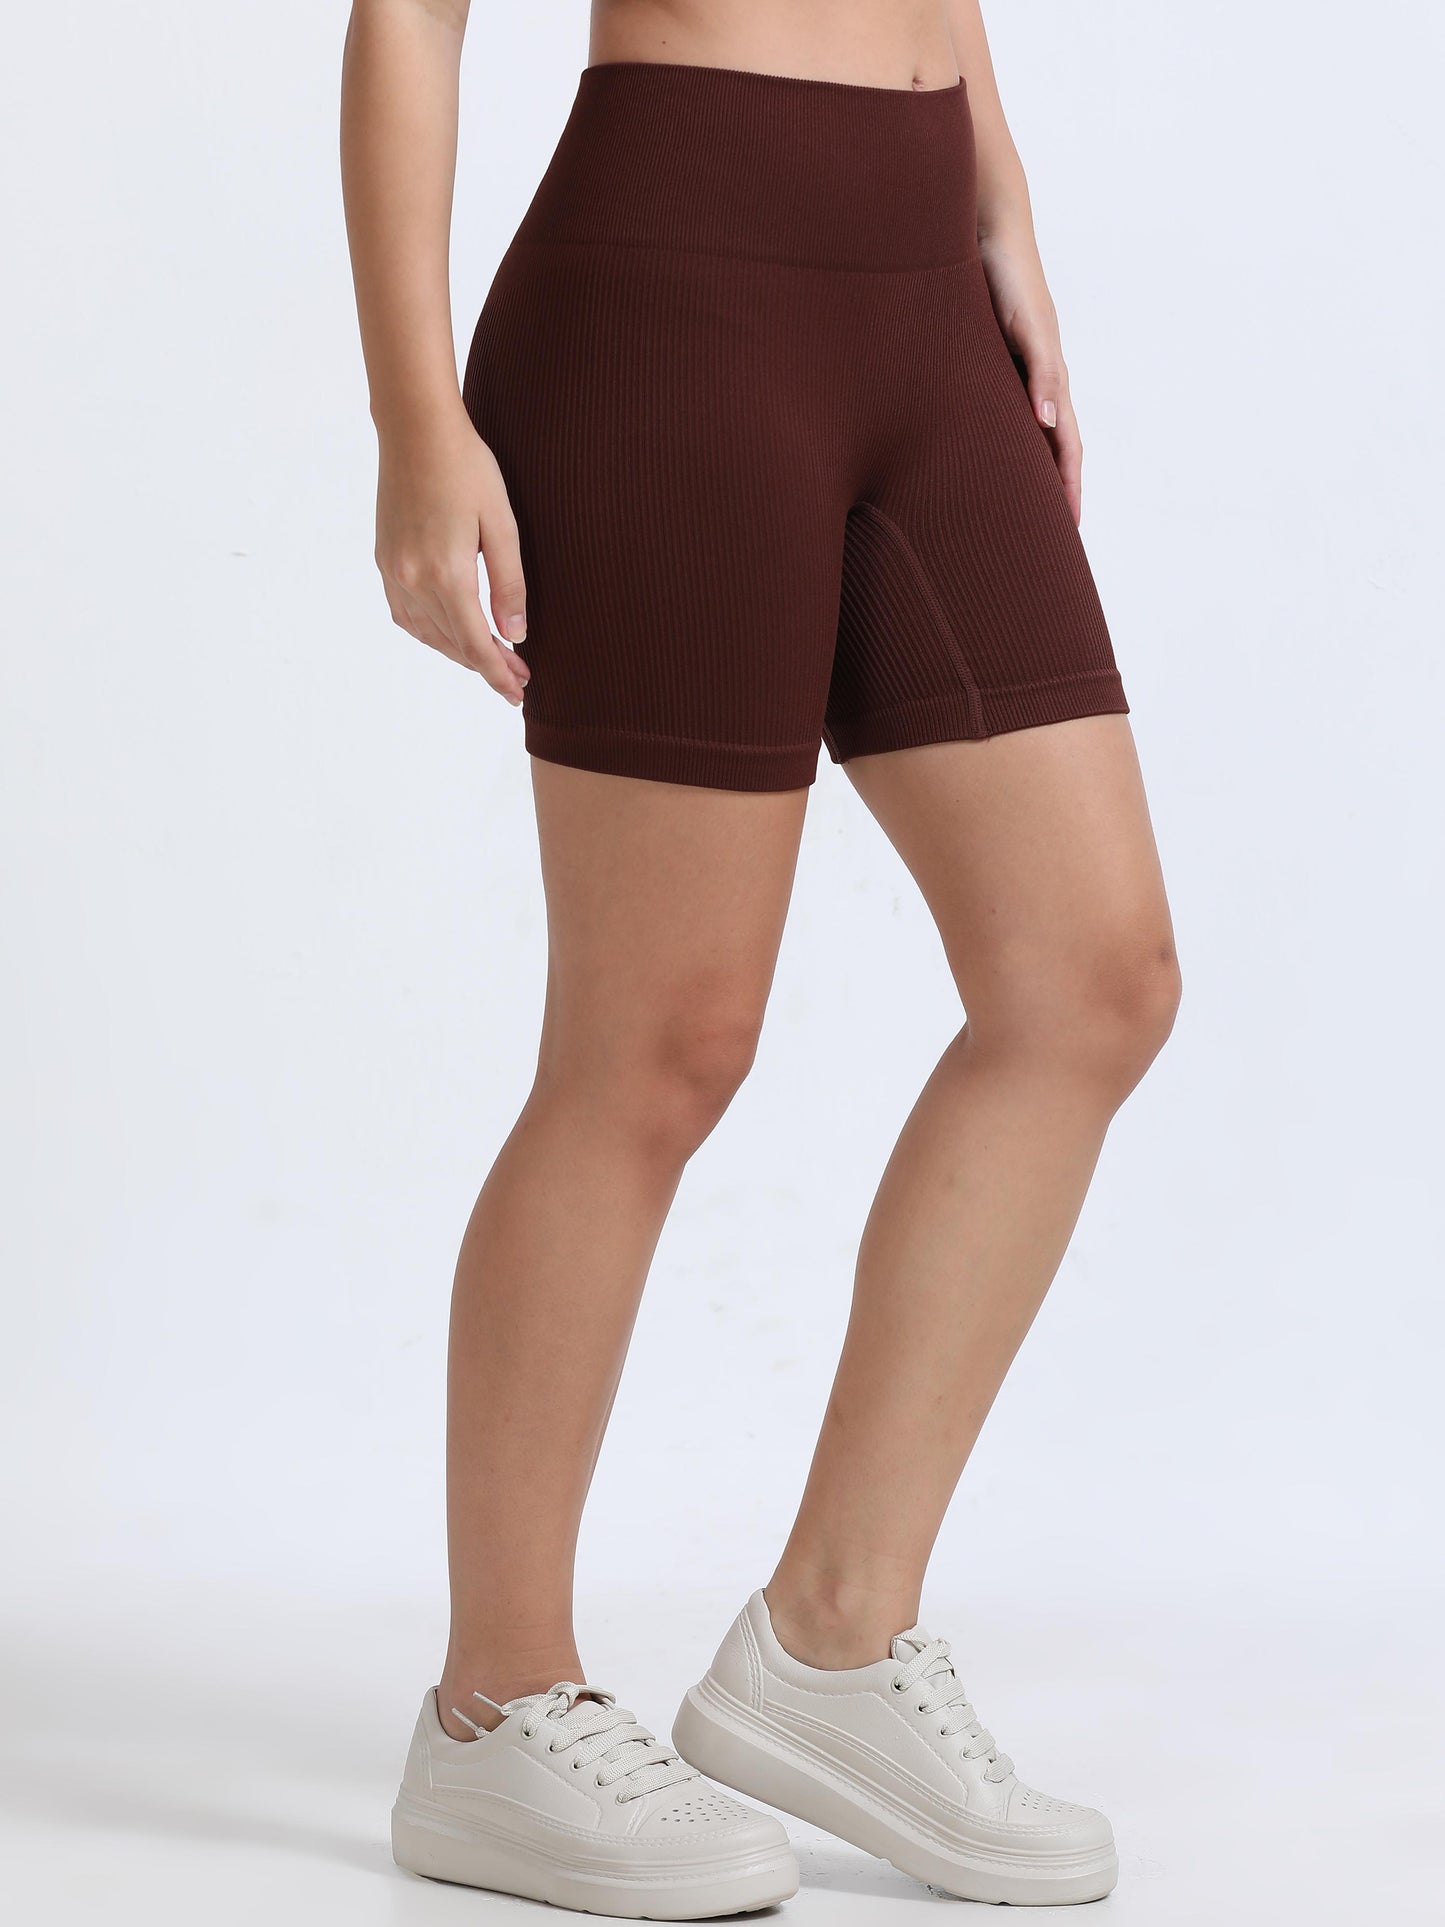 Maroon Gym Shorts Women